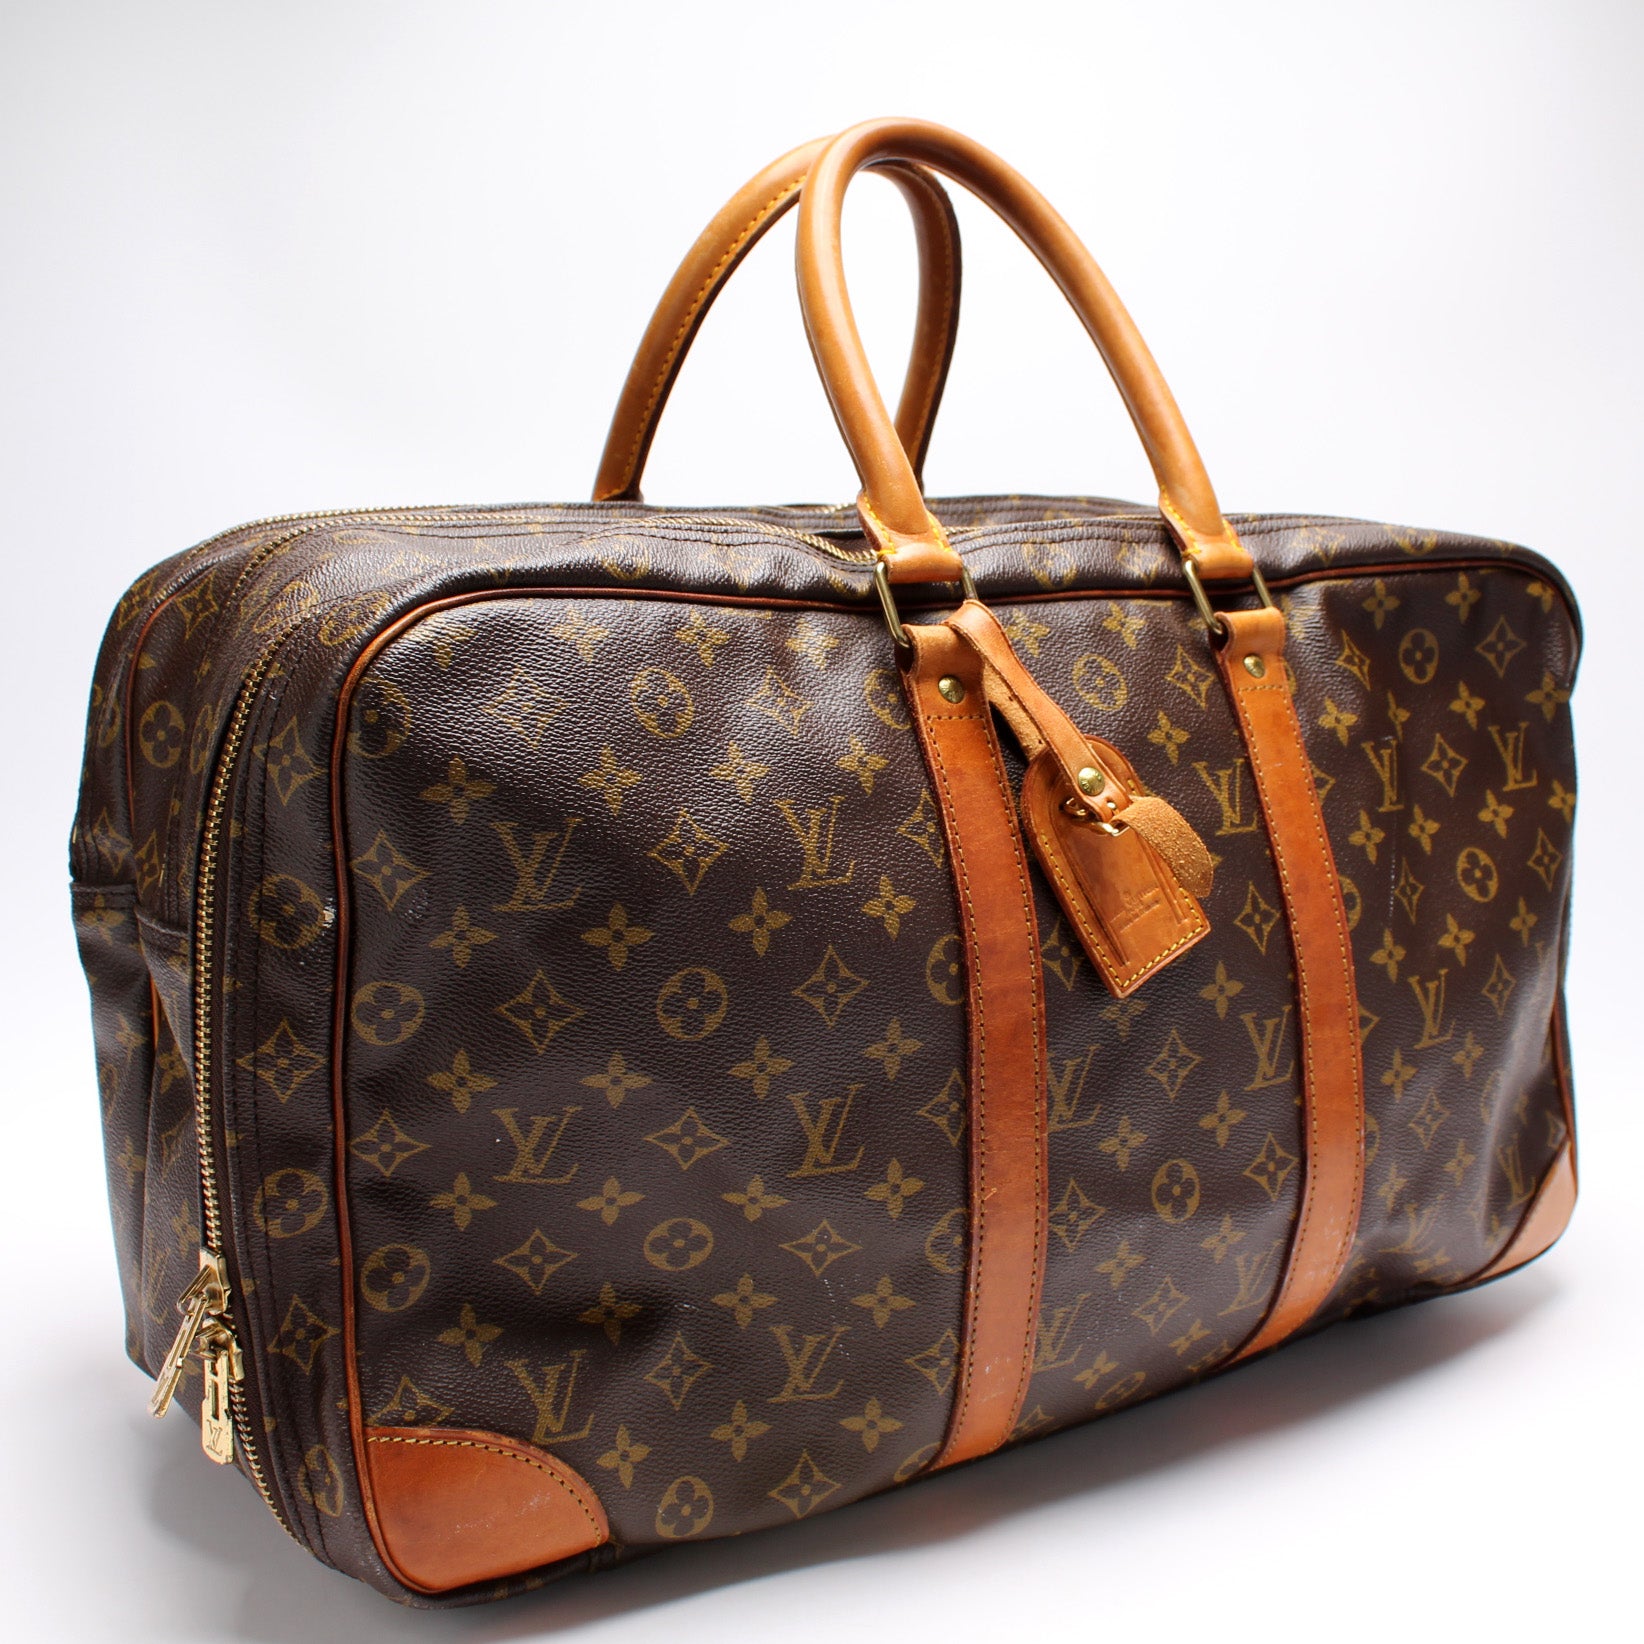 Authentic Louis Vuitton Monogram Luggage Weekender Bag Sirius